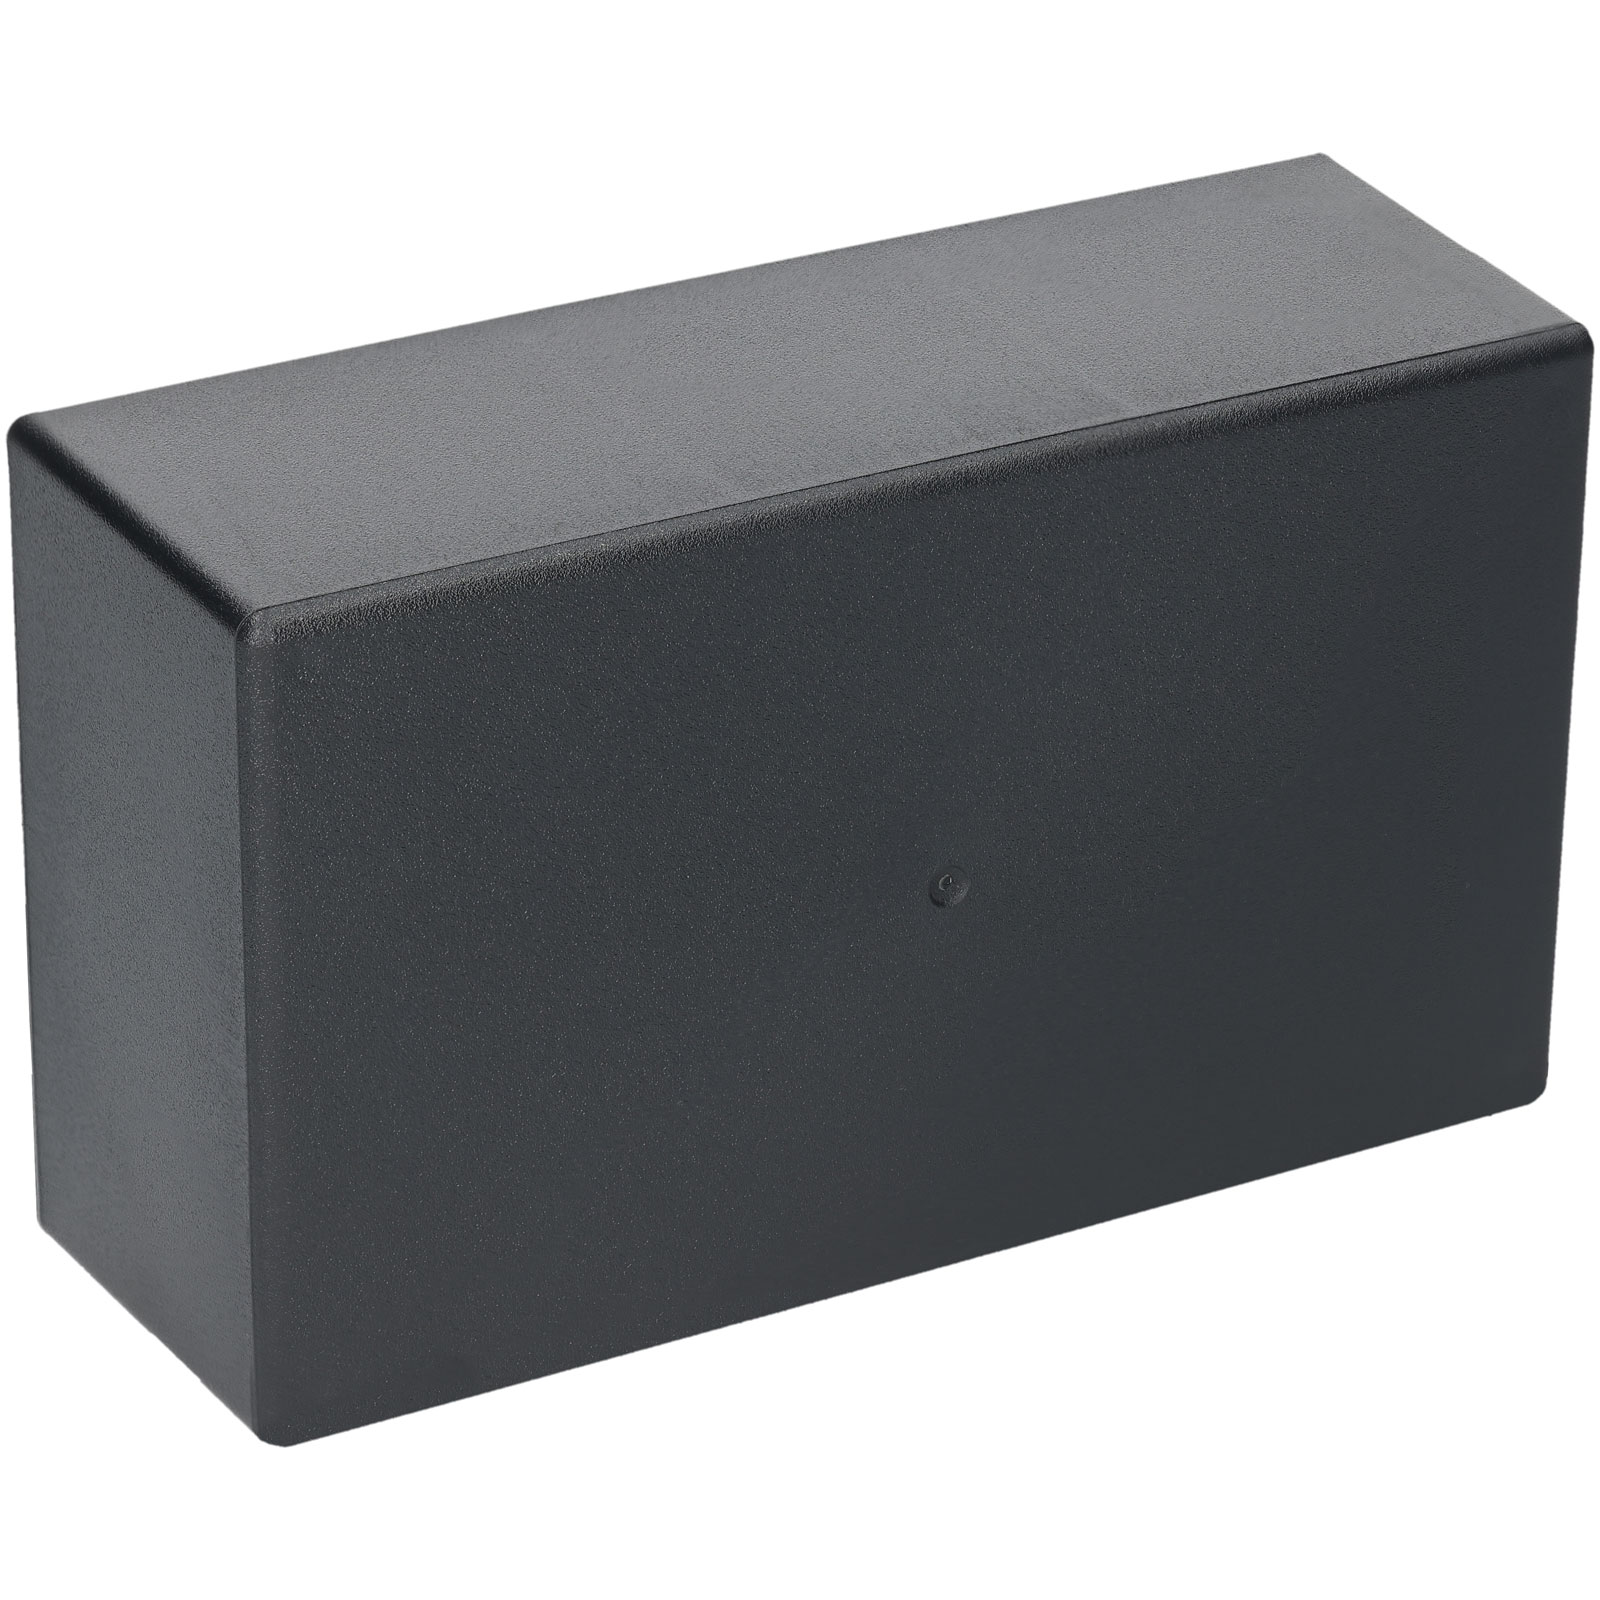 R-TECH 301791 ABS Utility Box Black 189x113x66.6mm